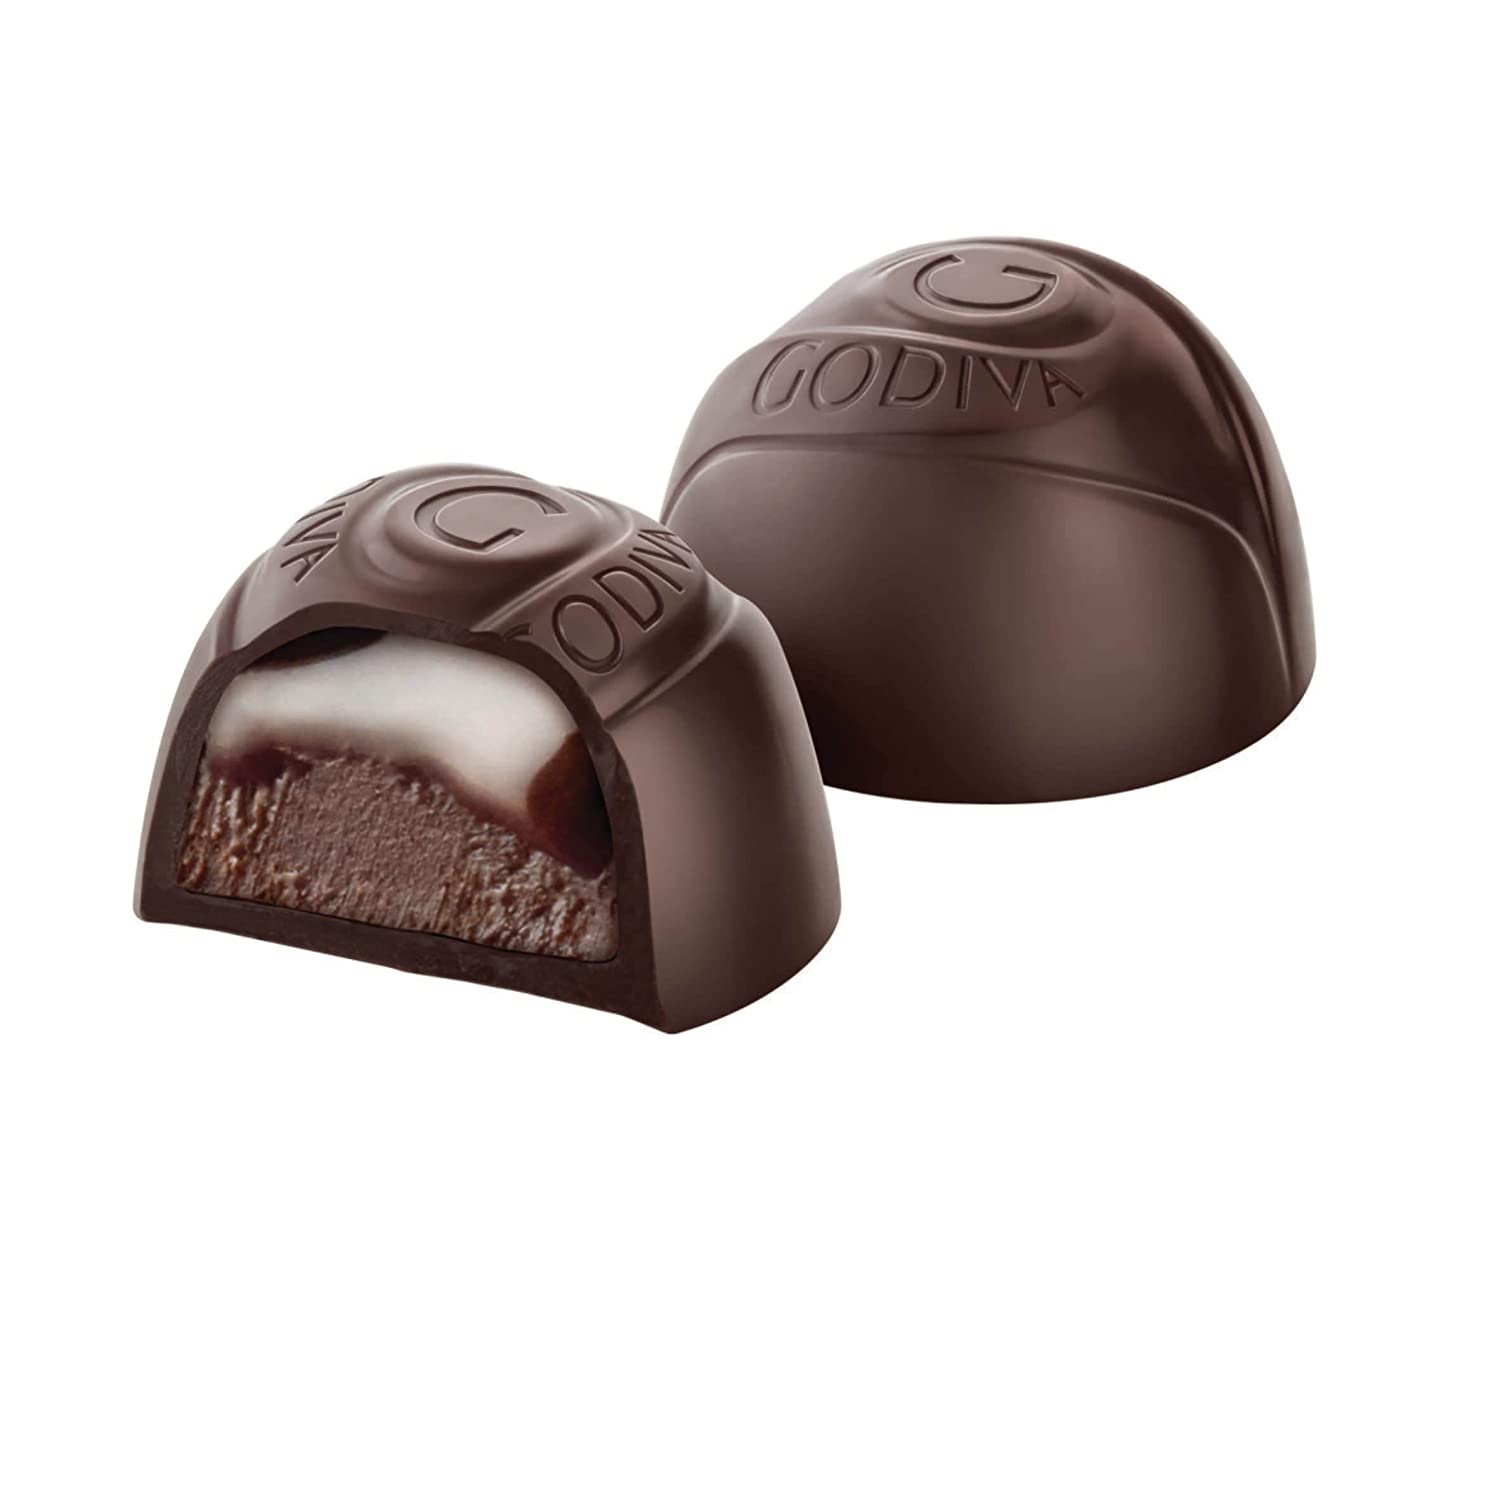 Chocolate GODIVA ngon nhất thế giới Truffles : Túi 19 cái 204g vị Wrapped Chocolate Lava Cake